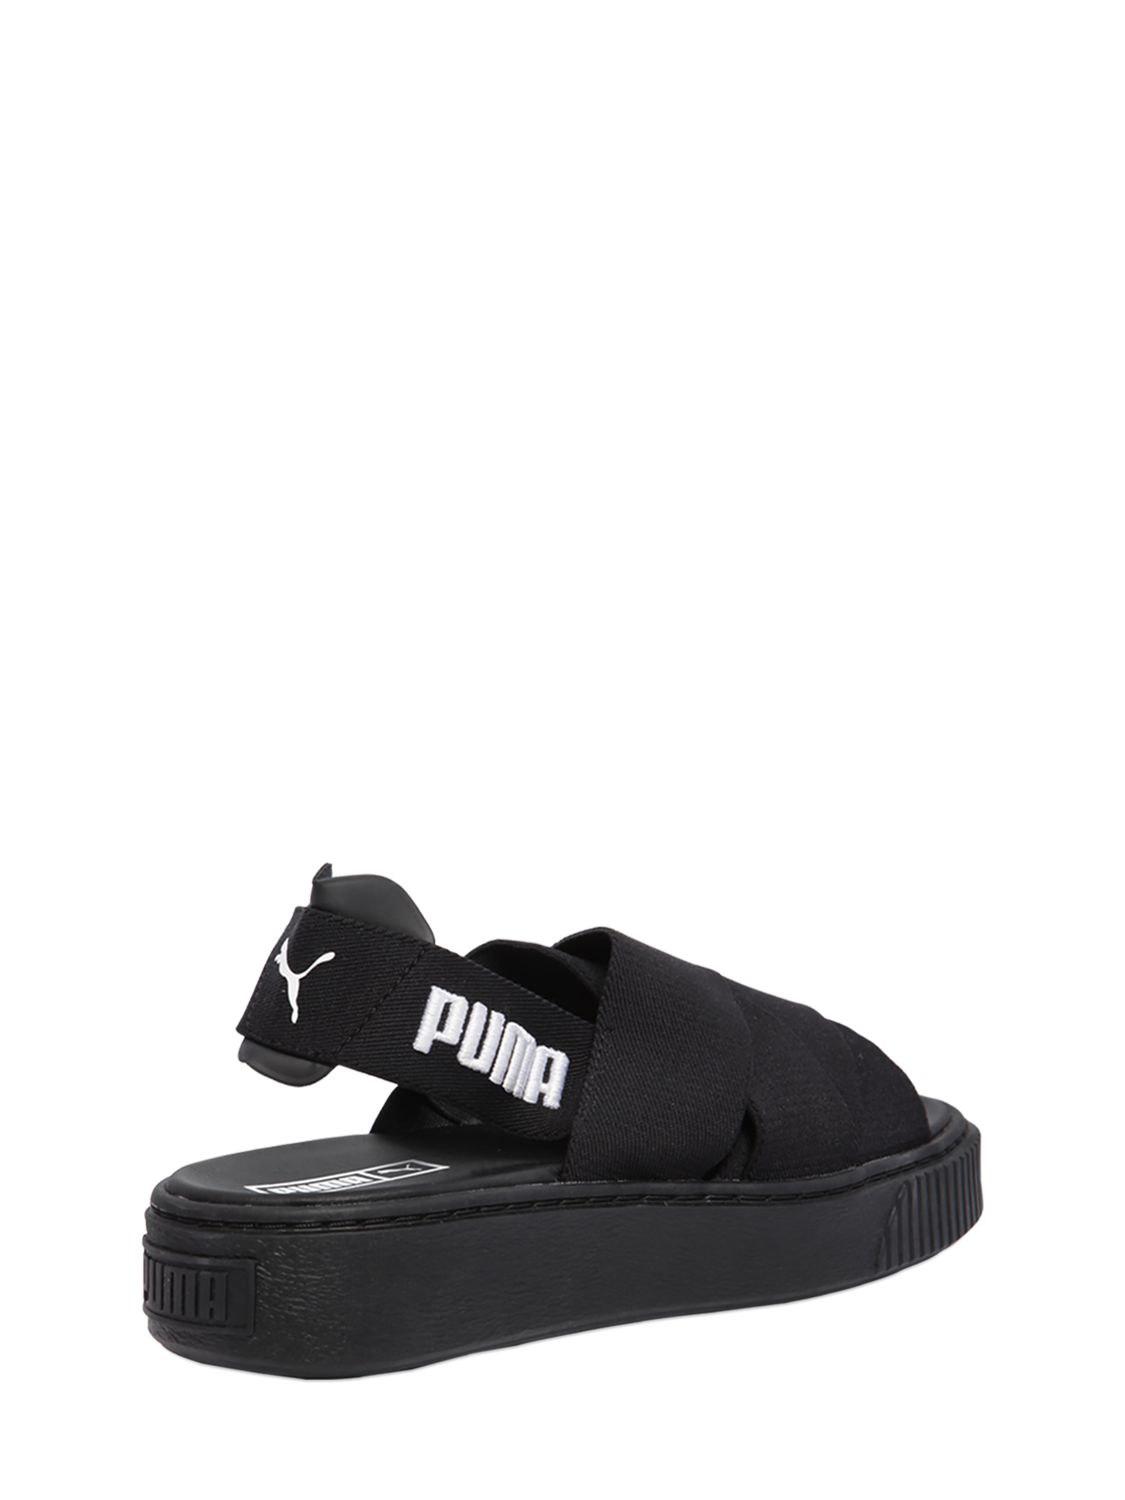 Puma Select Rubber Elastic Slingback Platform Sandals in Black | Lyst